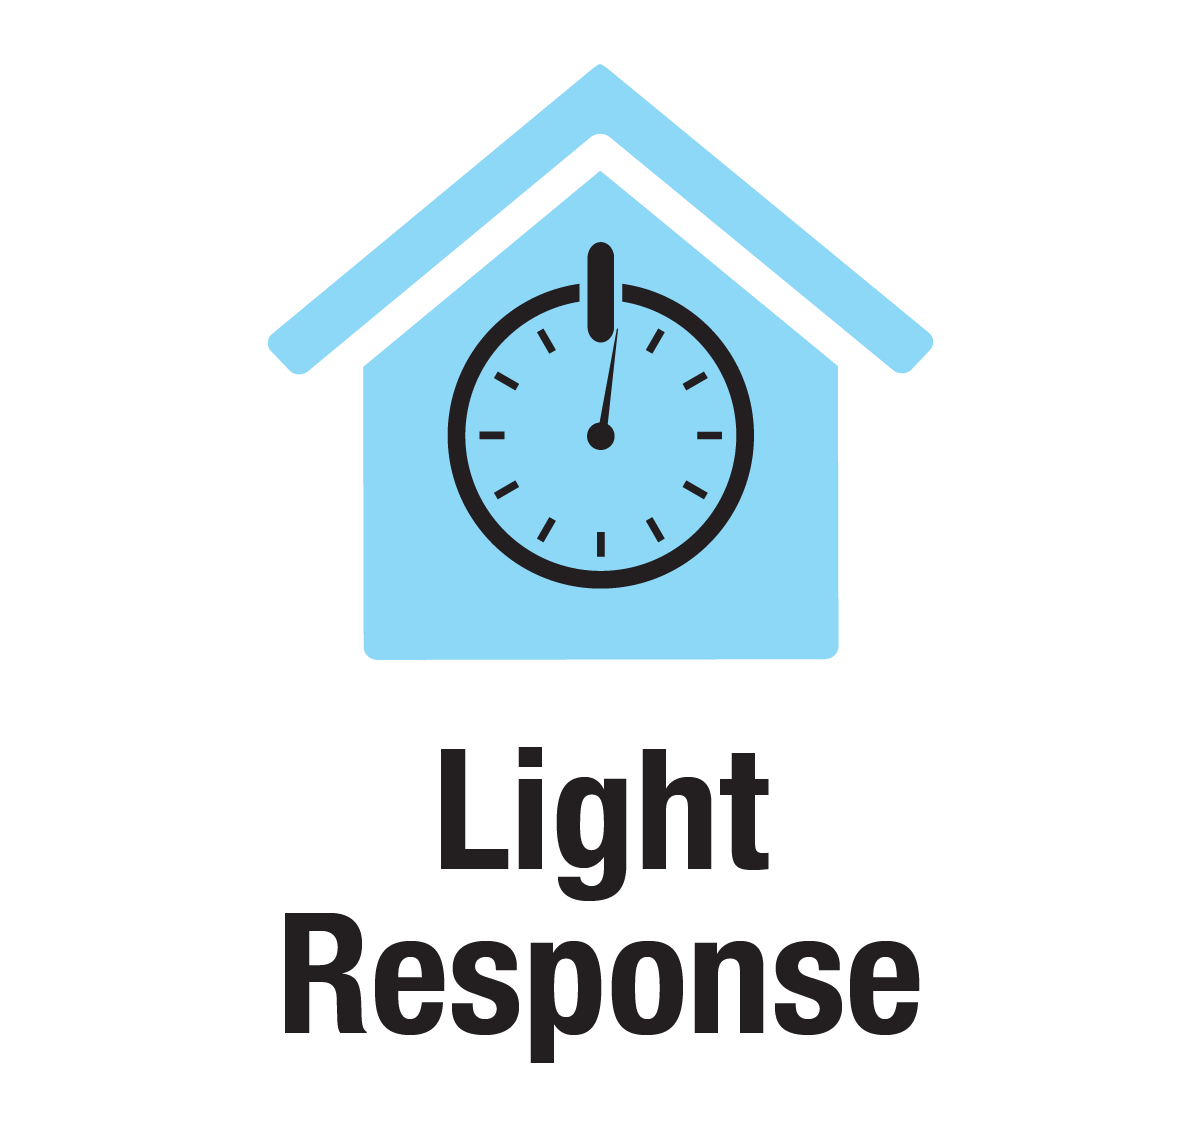 Light Response
